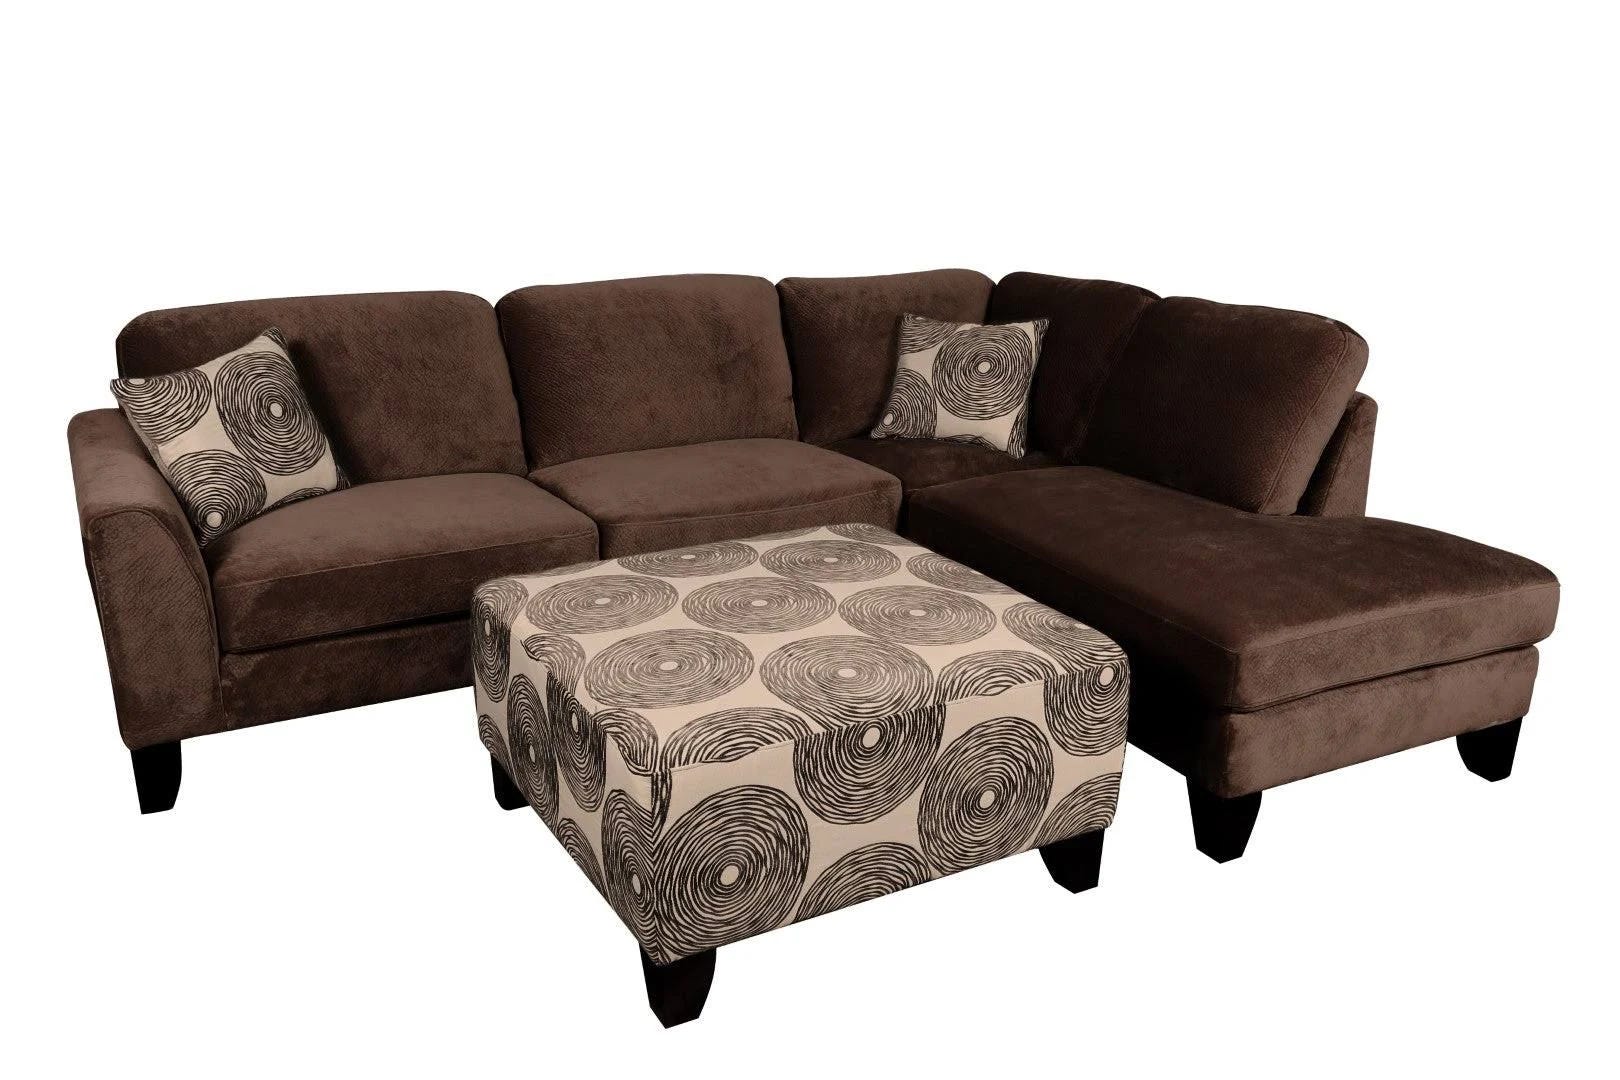 Malibu Brown Microfiber Sectional for Comfortable Home Relaxation | Image